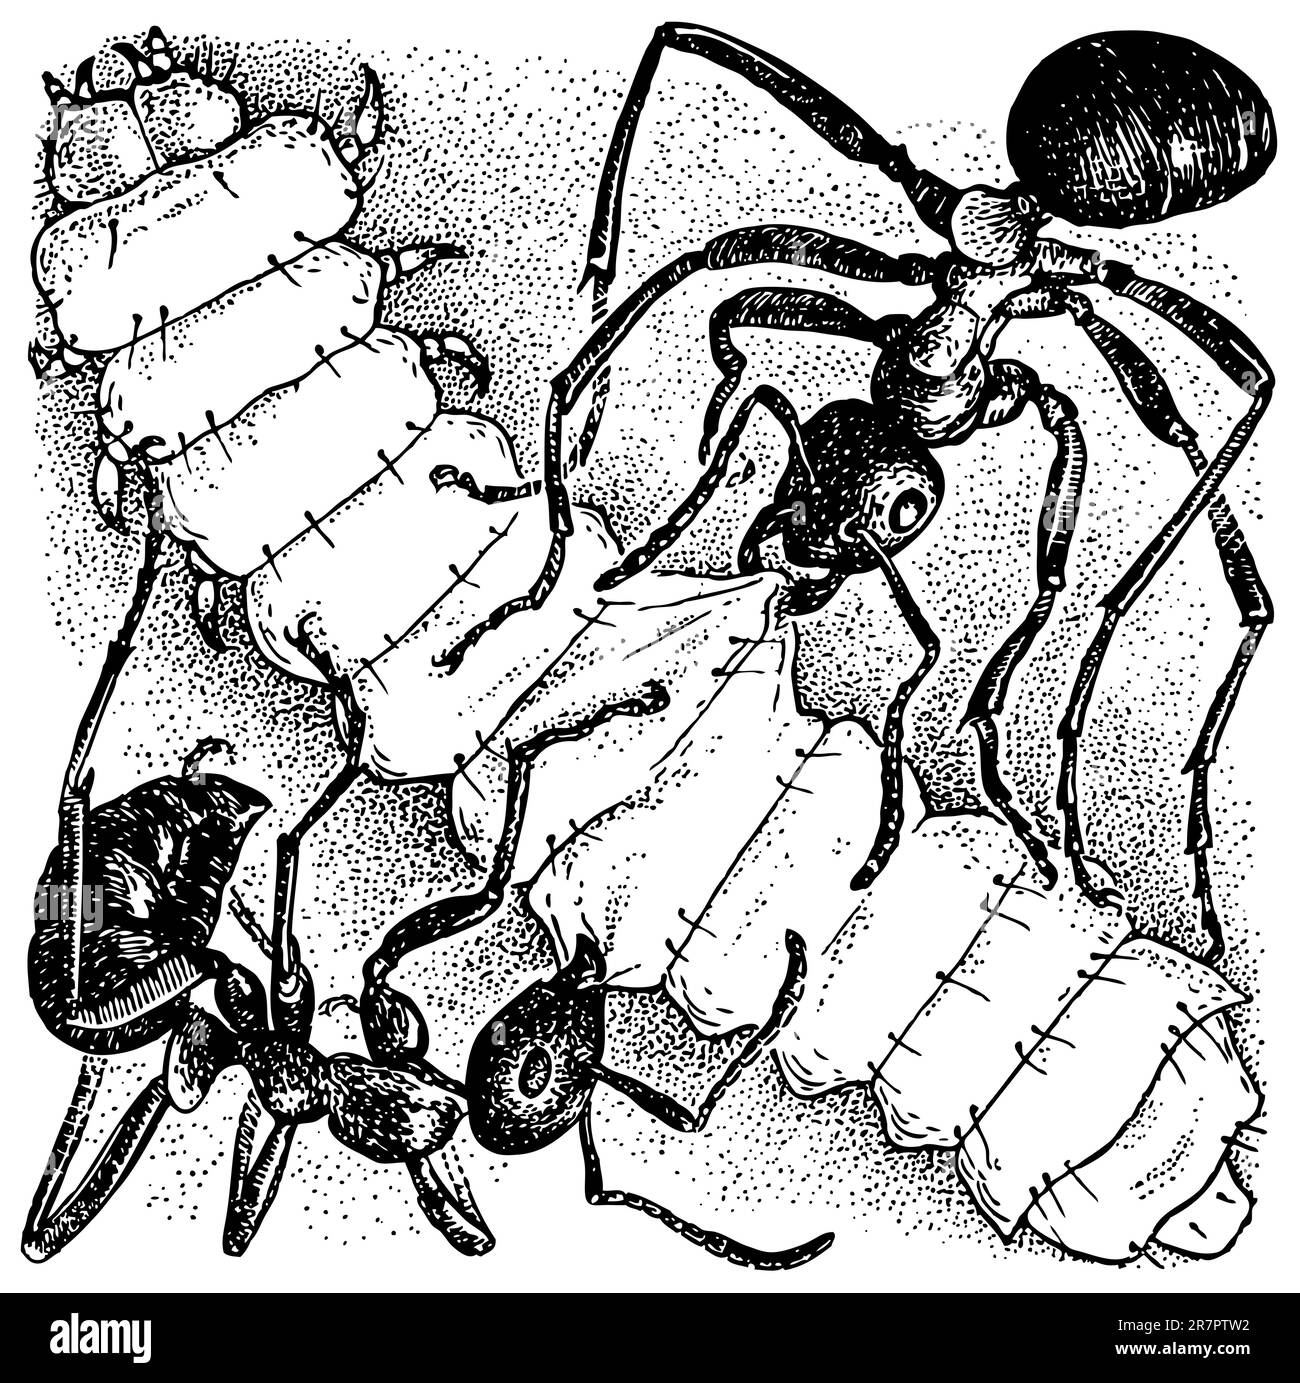 Ameisen greifen Larven an Stock Vektor